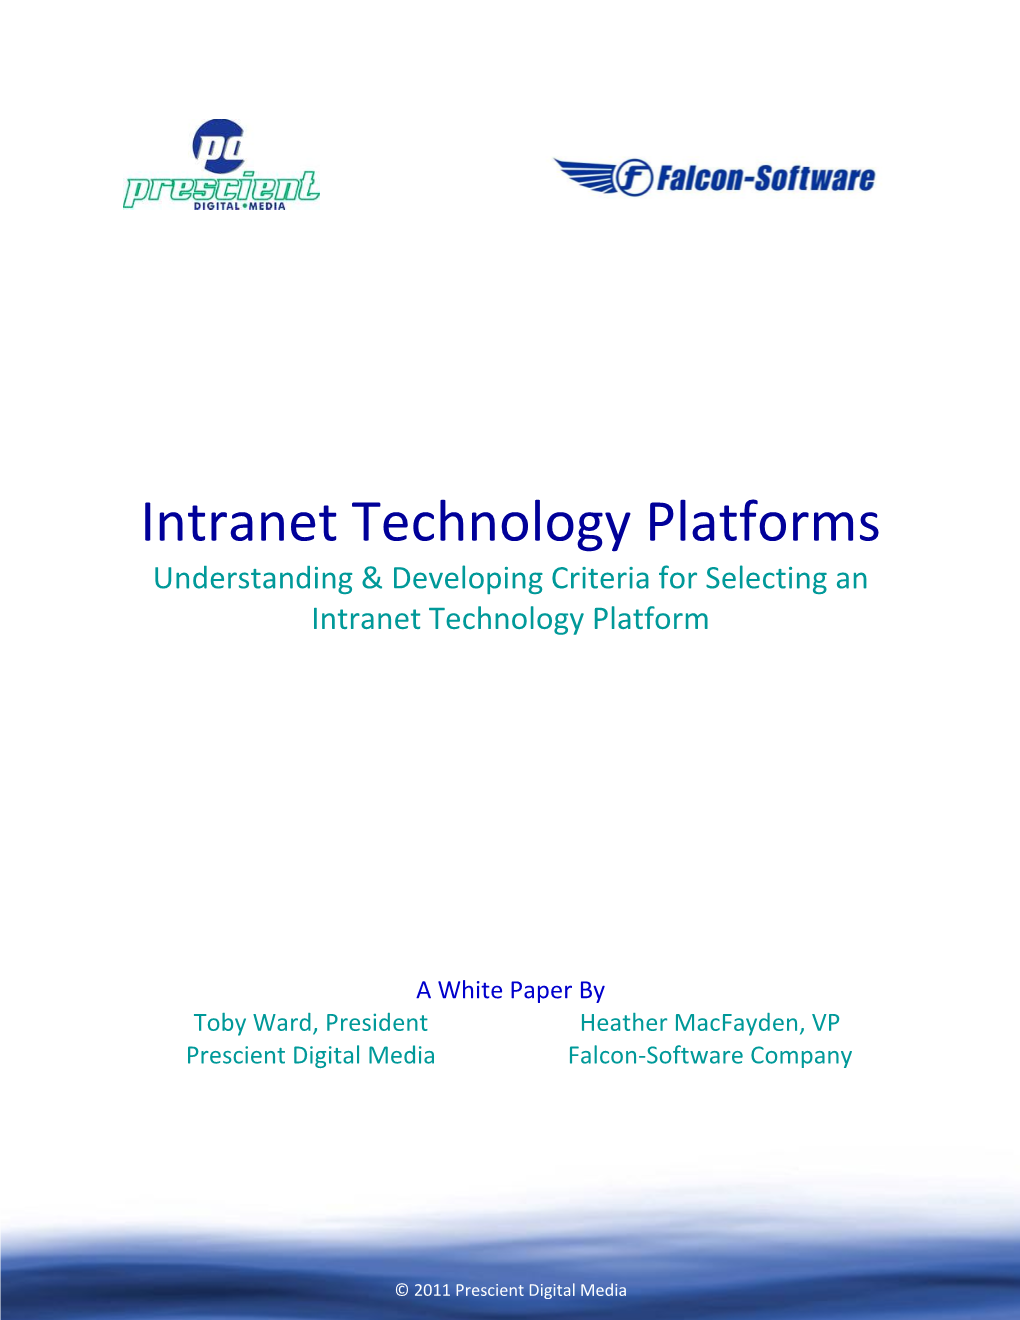 Intranet Technology Platforms Understanding & Developing Criteria for Selecting an Intranet Technology Platform